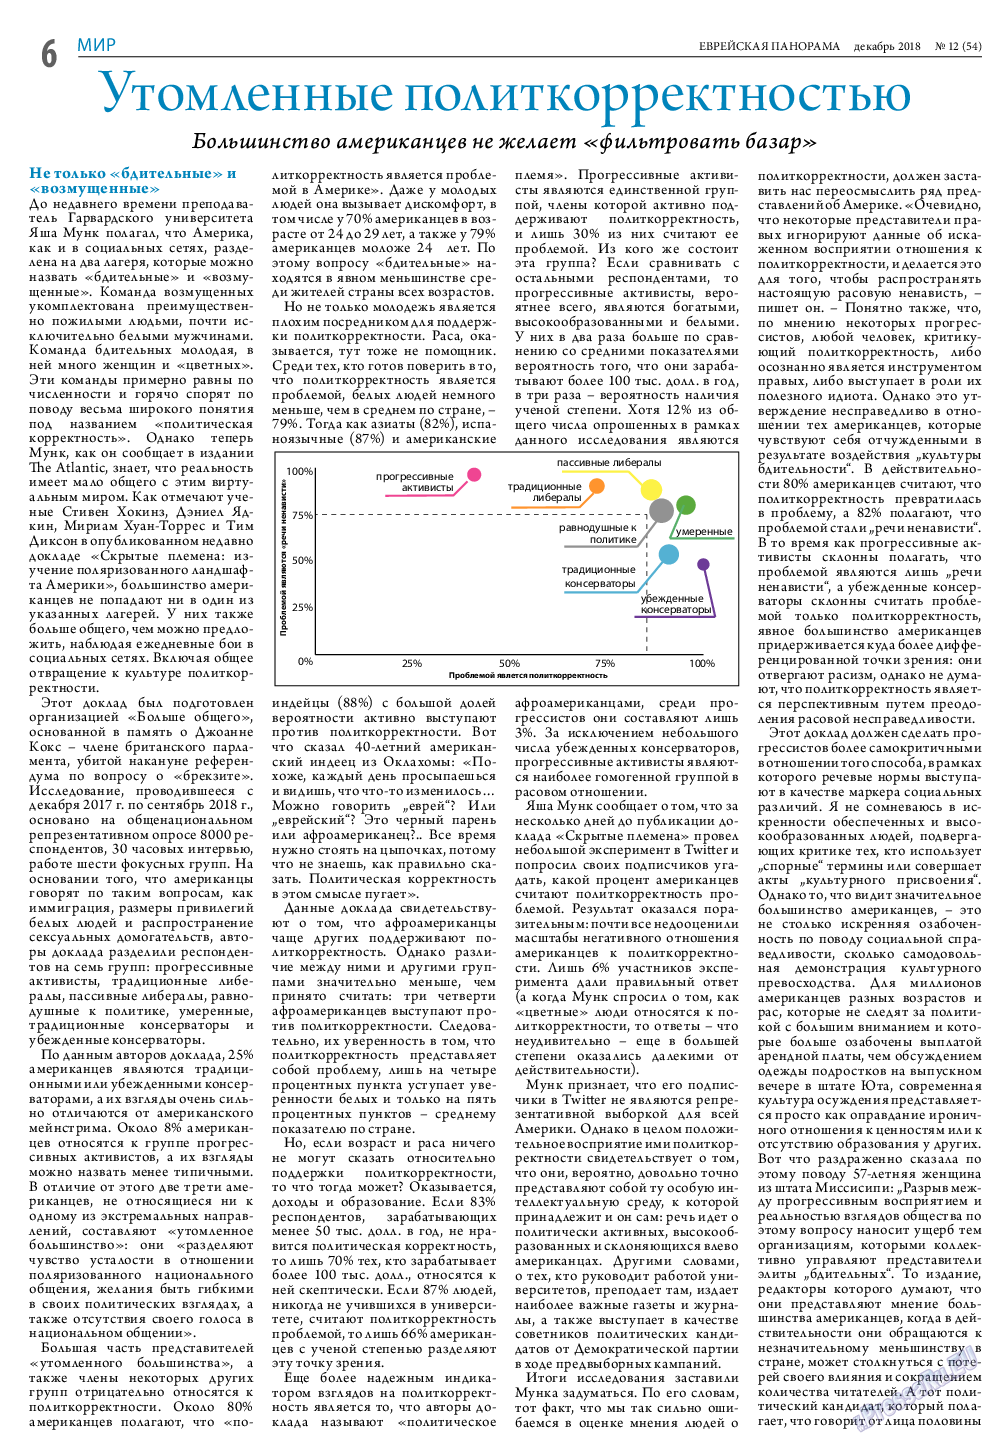 Еврейская панорама, газета. 2018 №12 стр.6